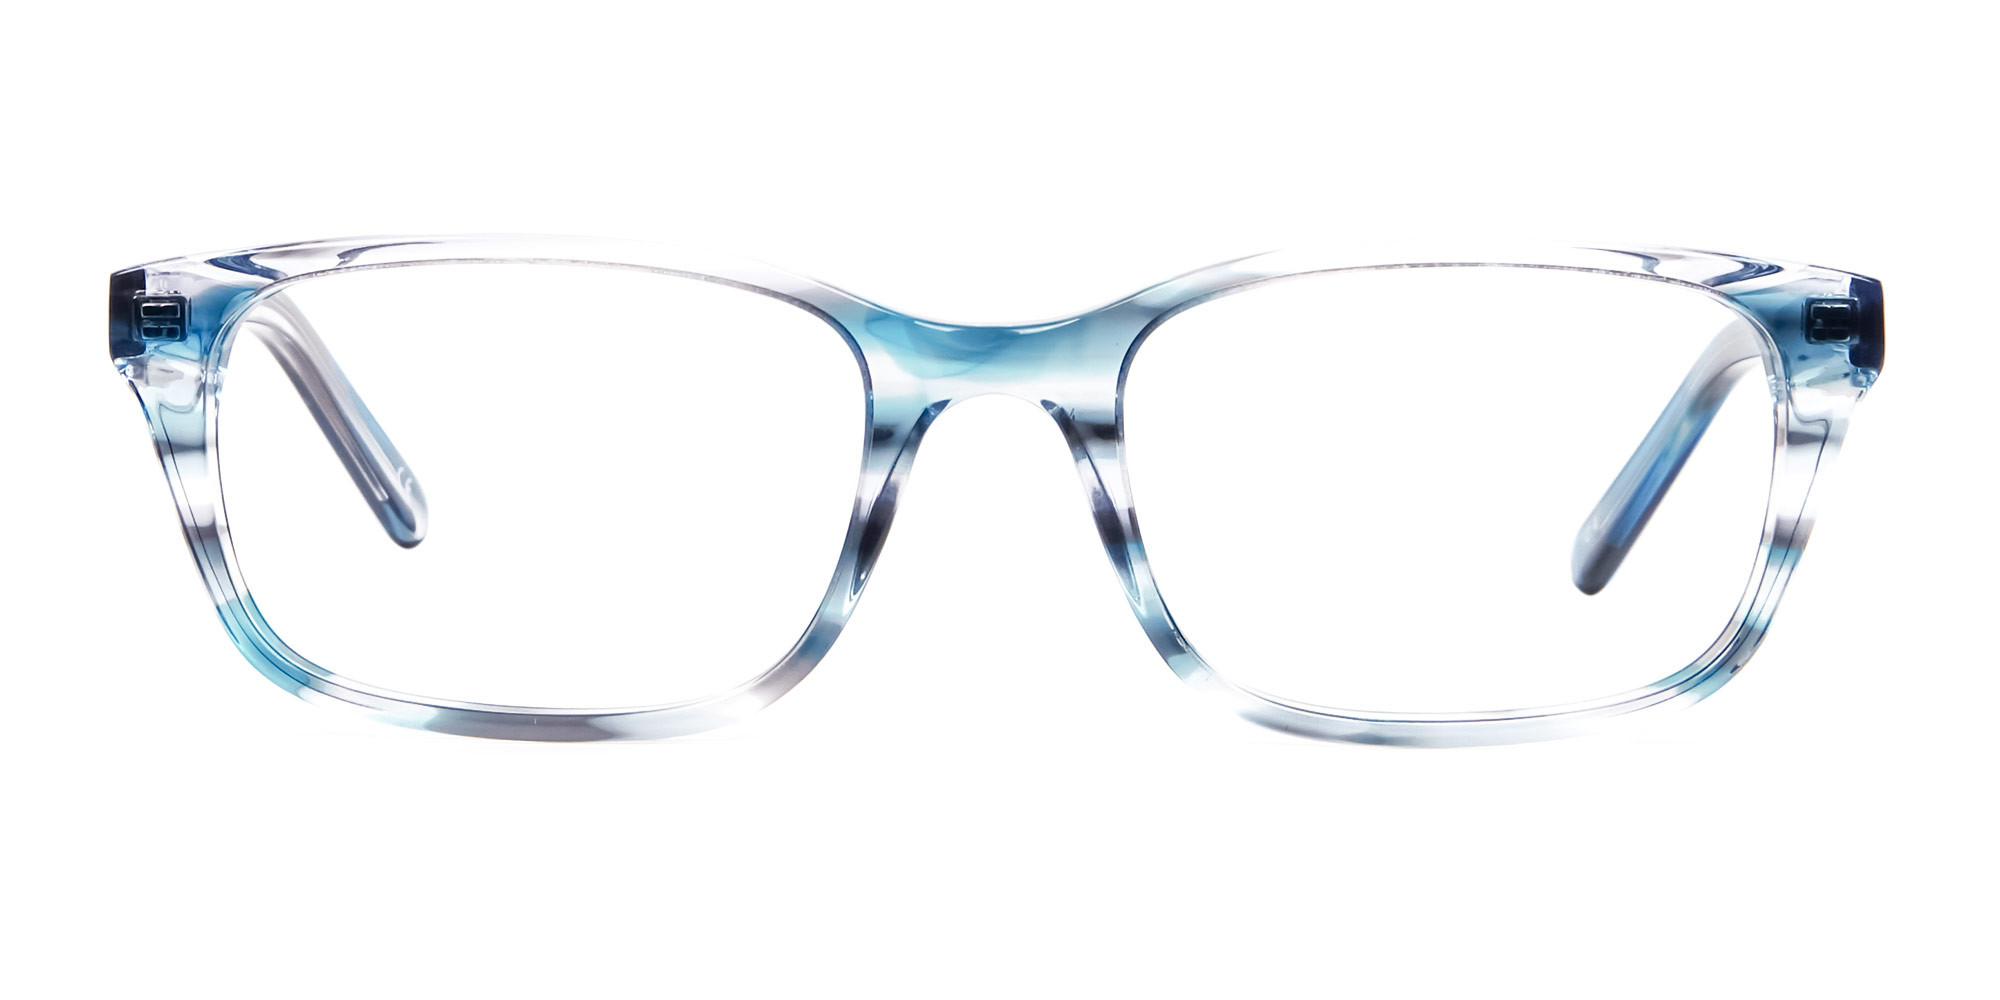 SAM BA3 - Crystal Blue Eyeglasses Frames Unisex | Specscart®